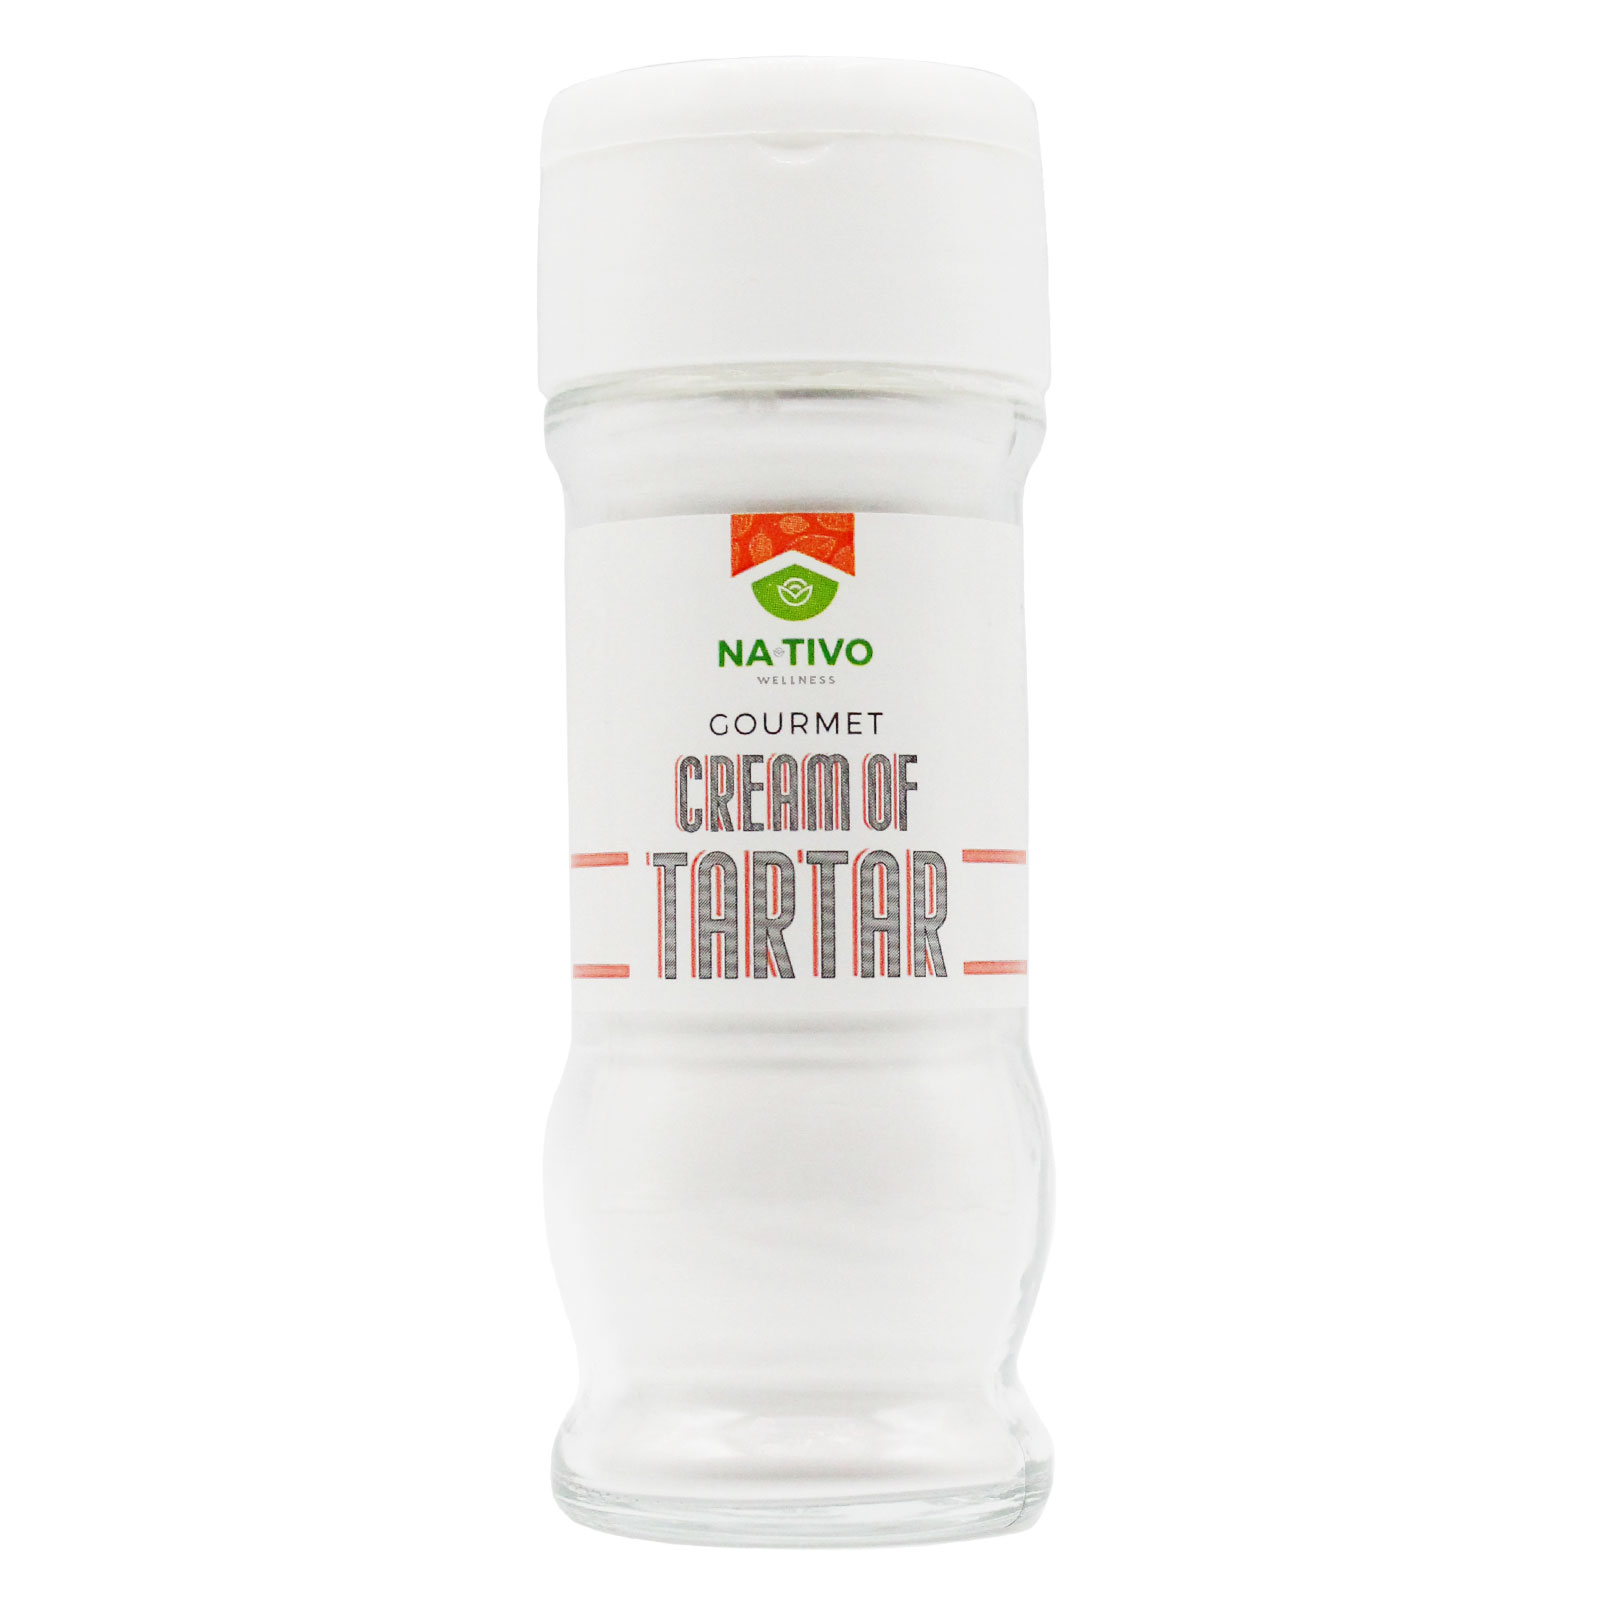 NaTivo Gourmet Cream Of Tartar Jar 12 units per case 2.7 oz